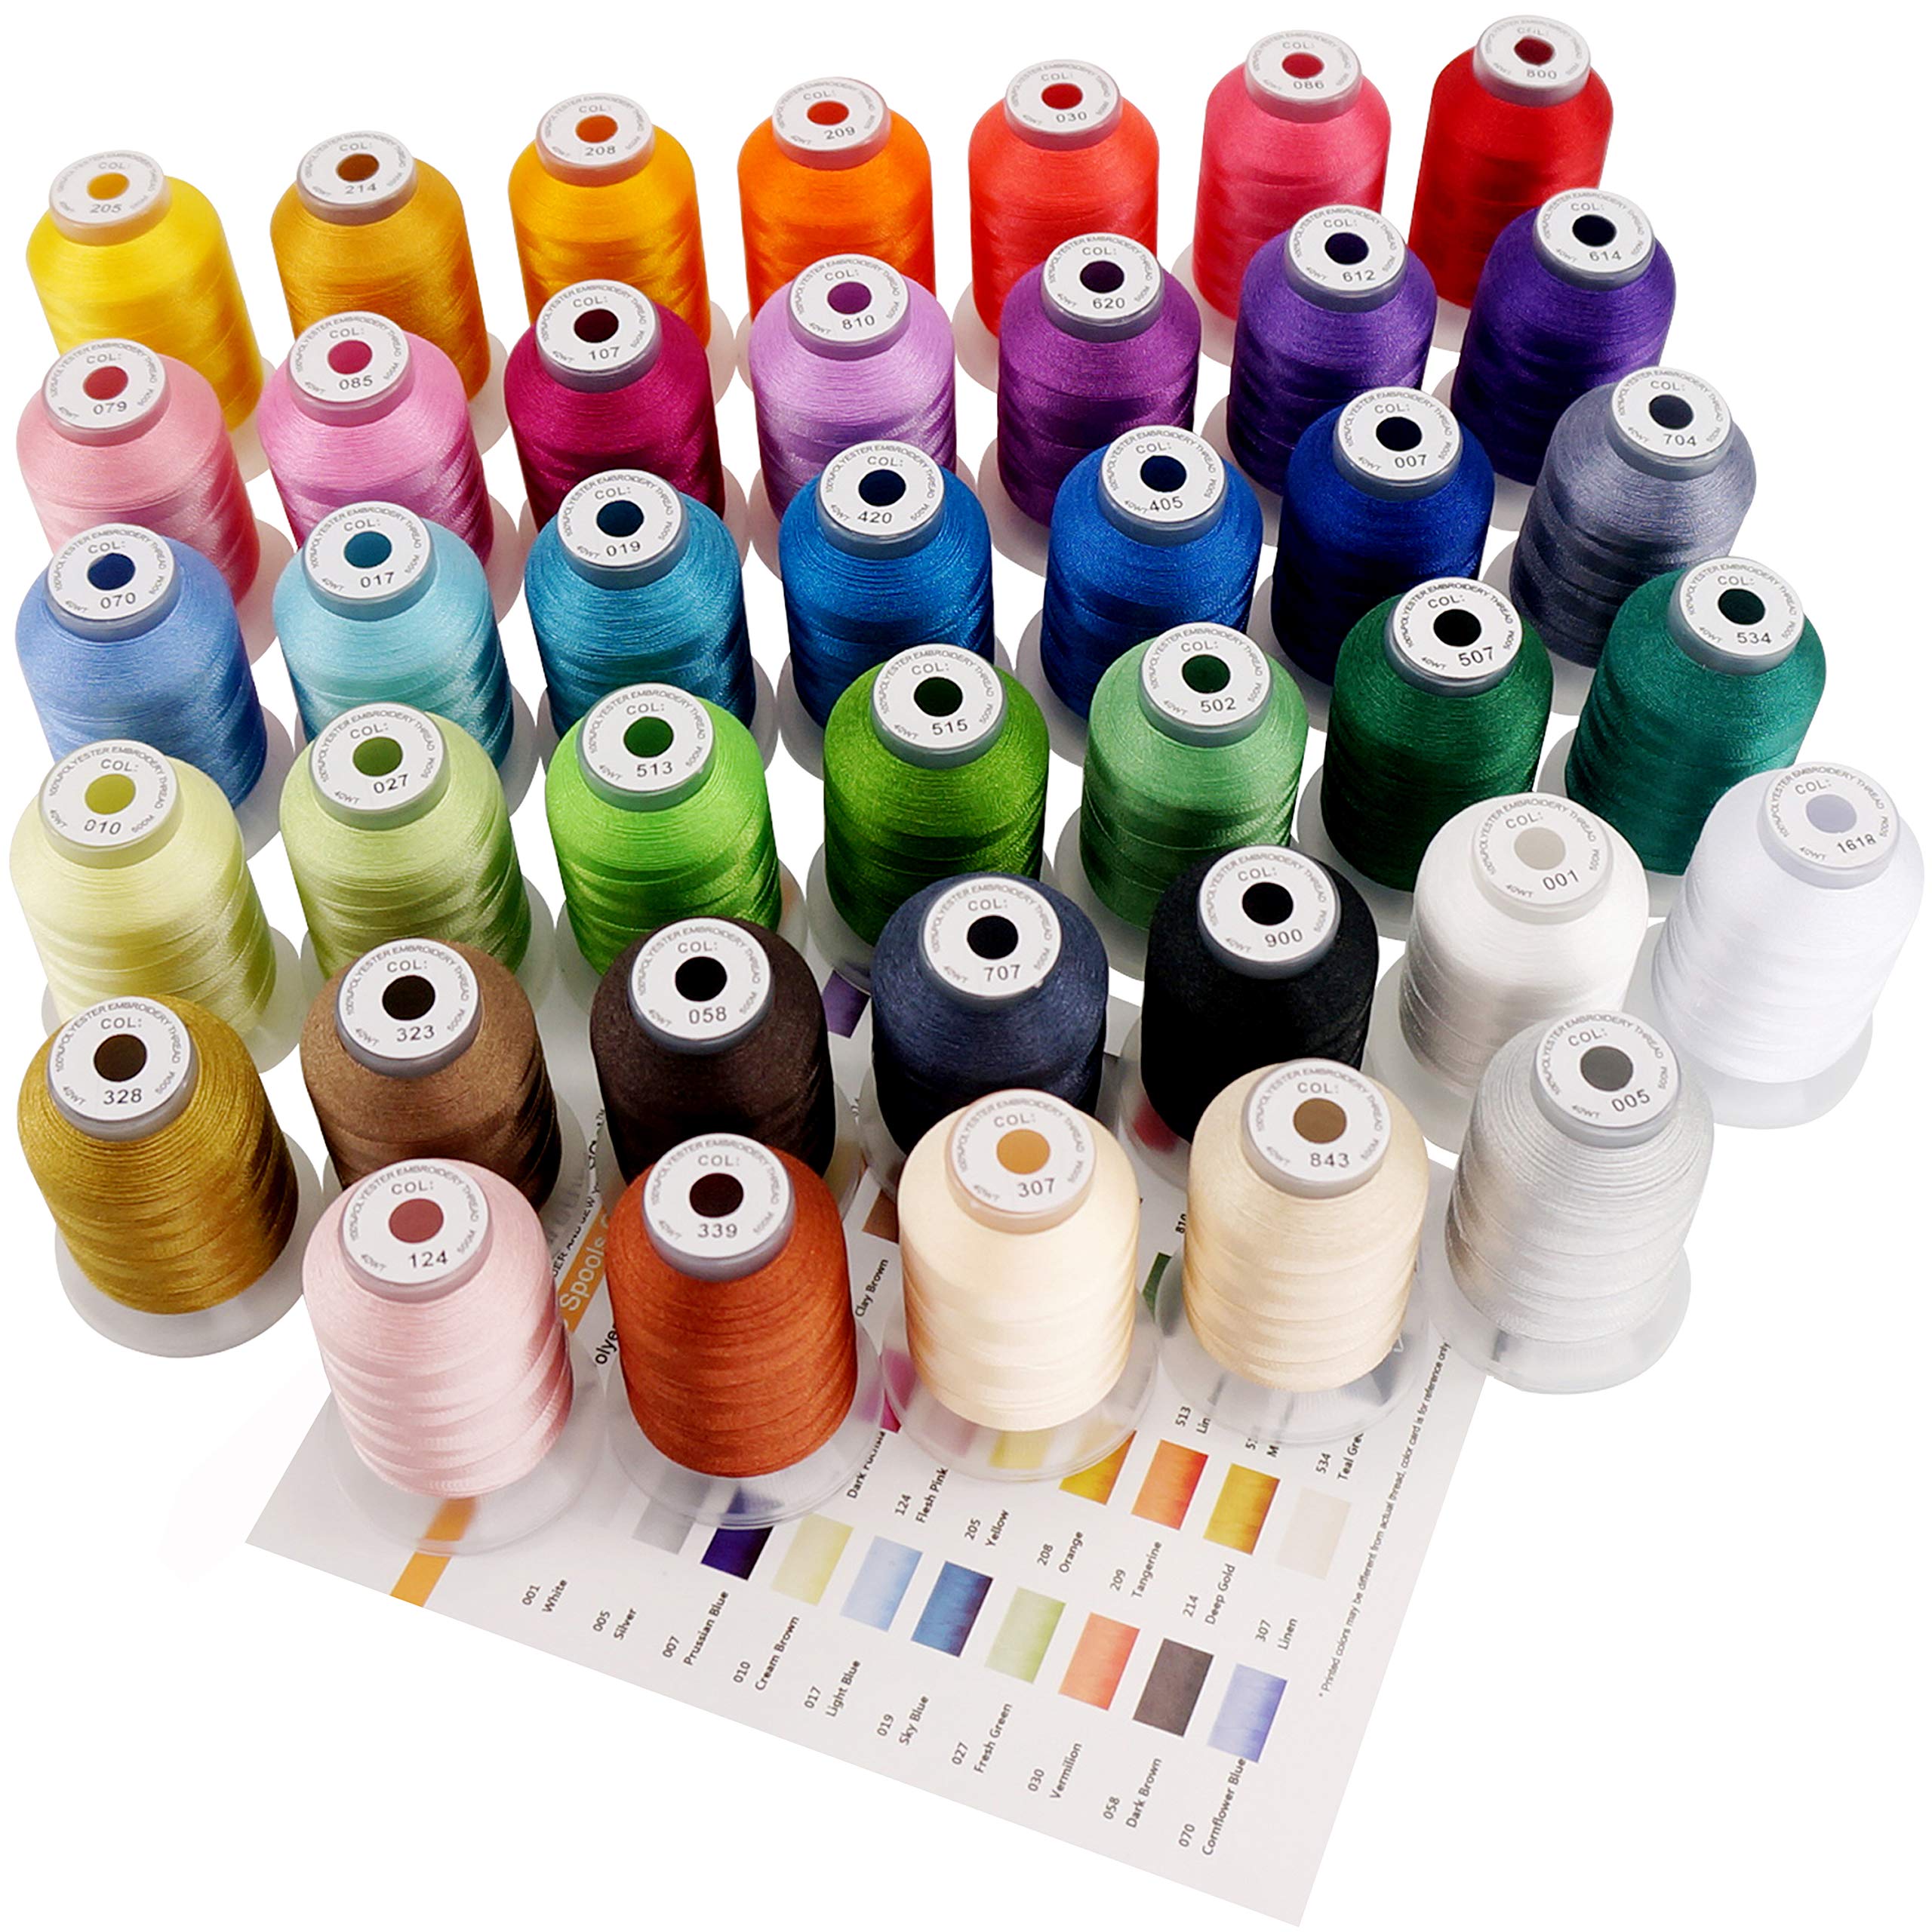 New brothread 32 Spools Polyester Embroidery Machine Thread Kit